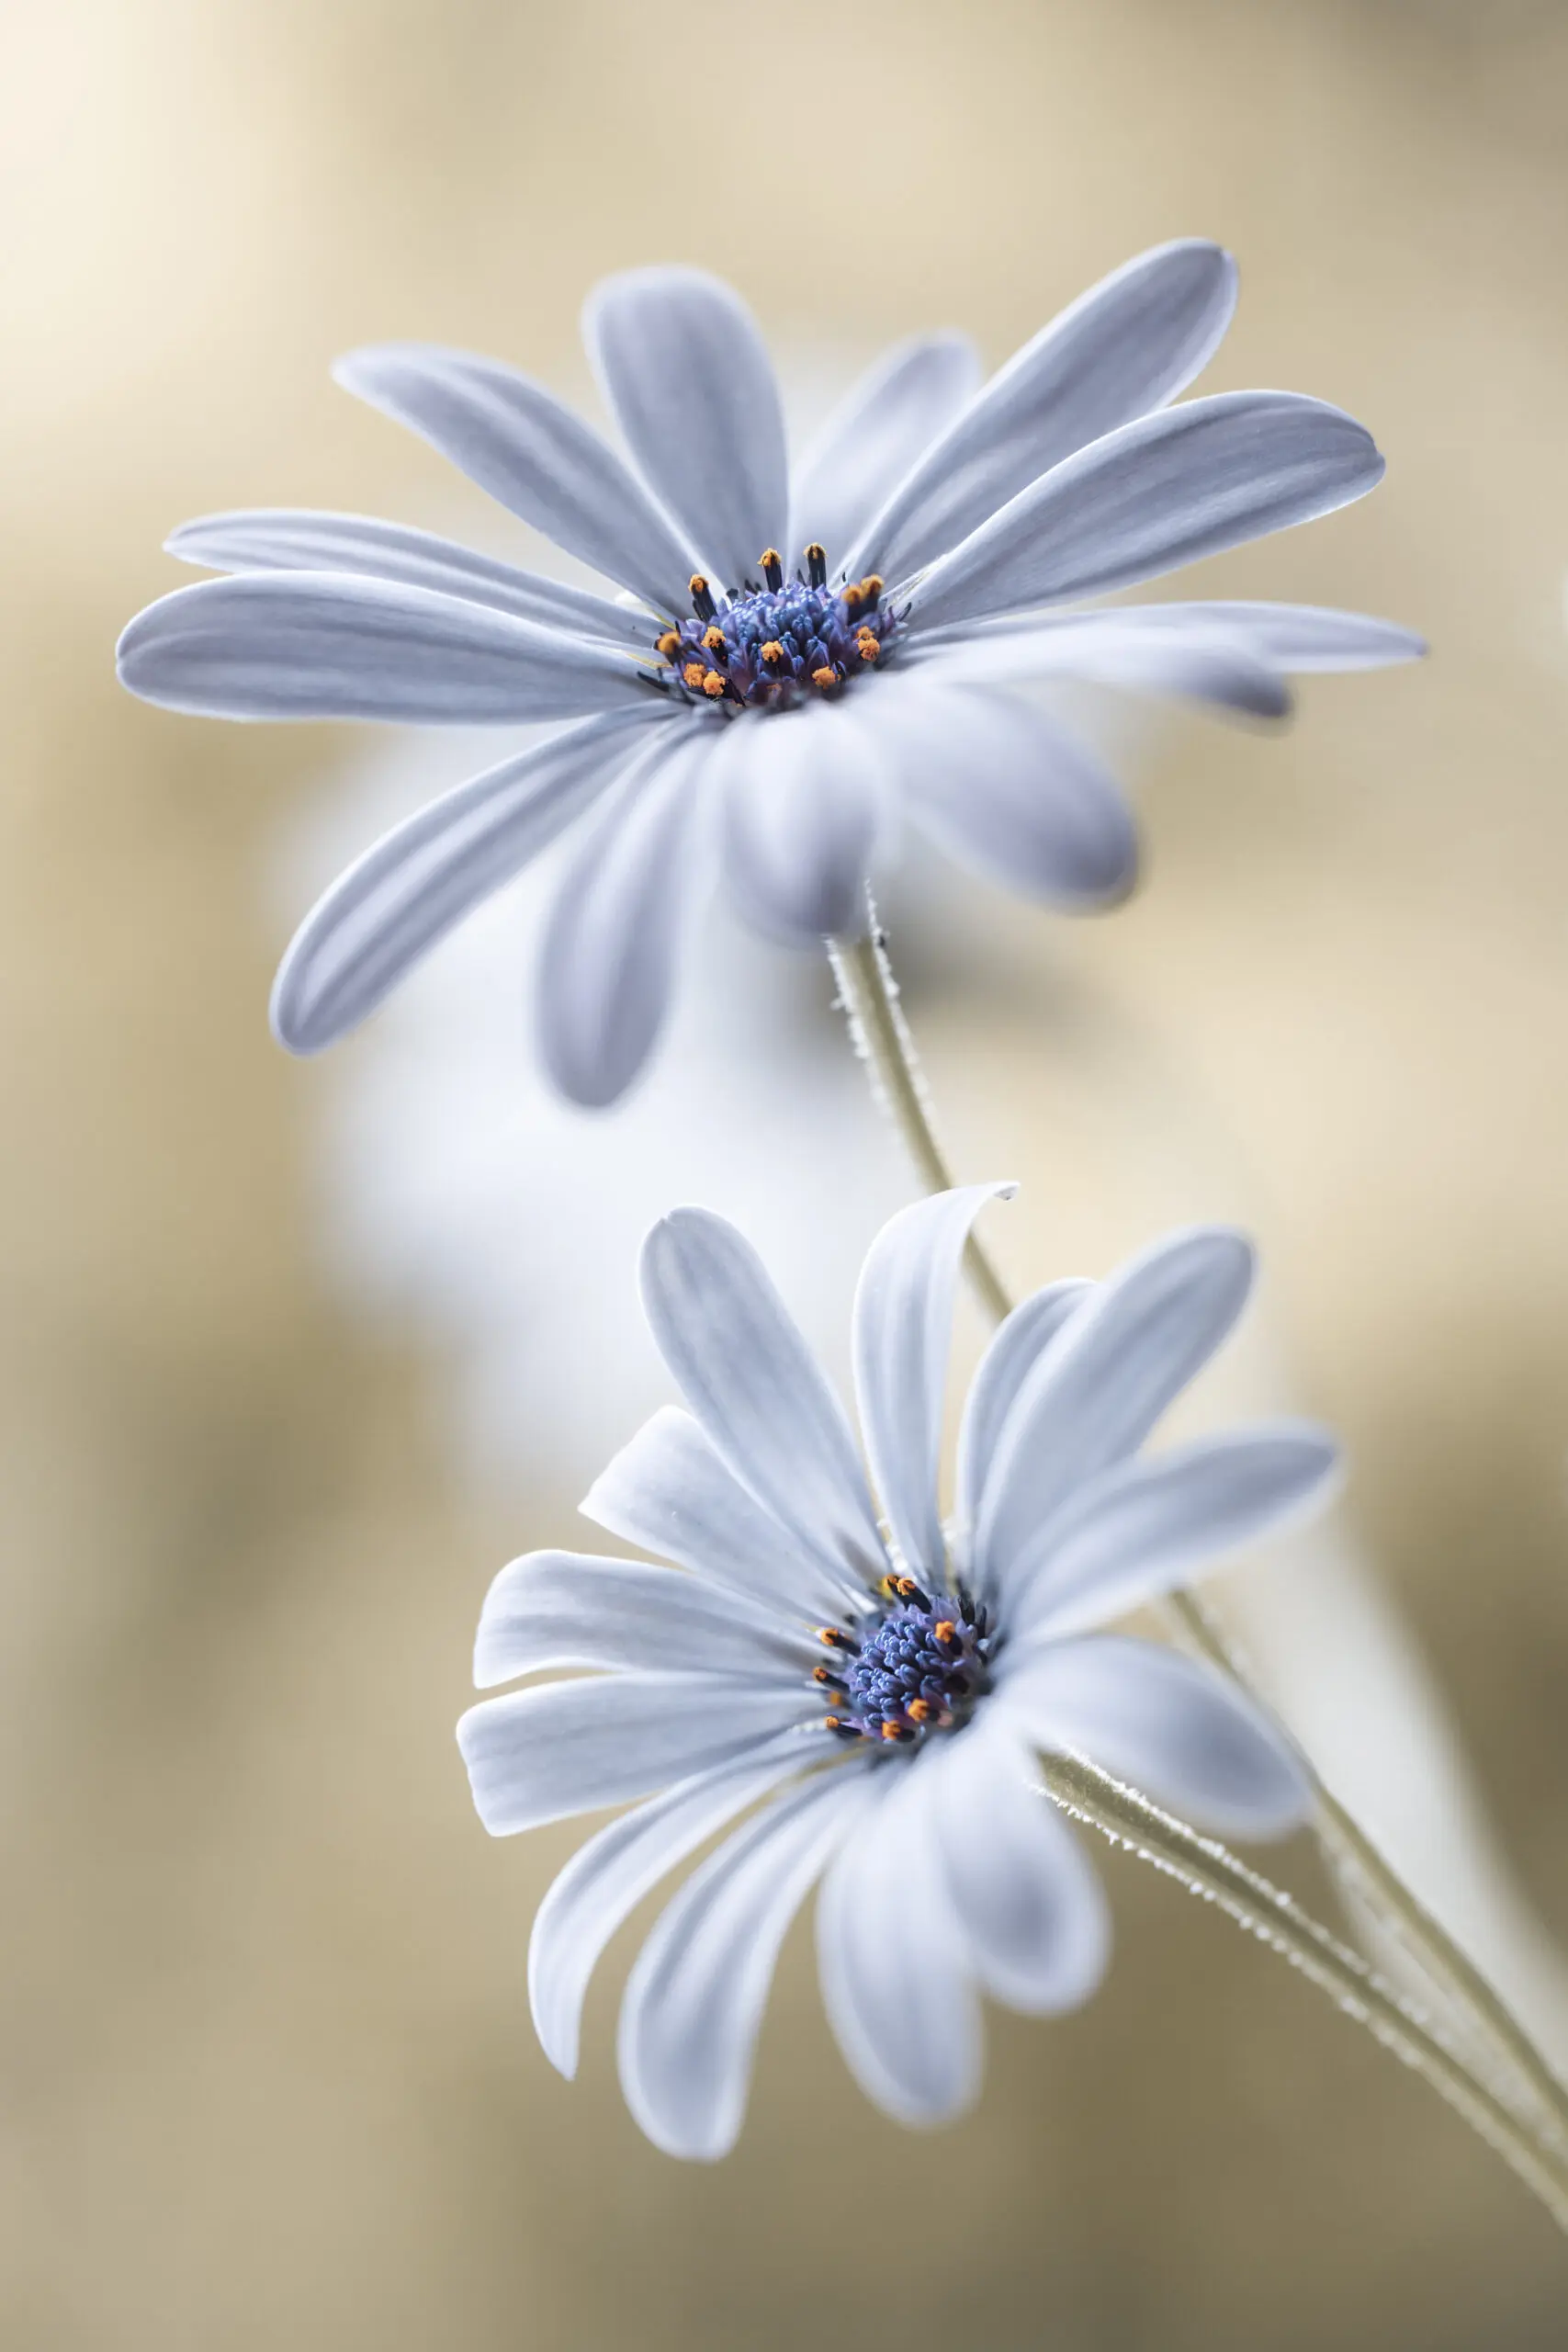 Wandbild (6279) Cape daisies by Mandy Disher,1x.com präsentiert: Natur,Blumen und Blüten,Makro